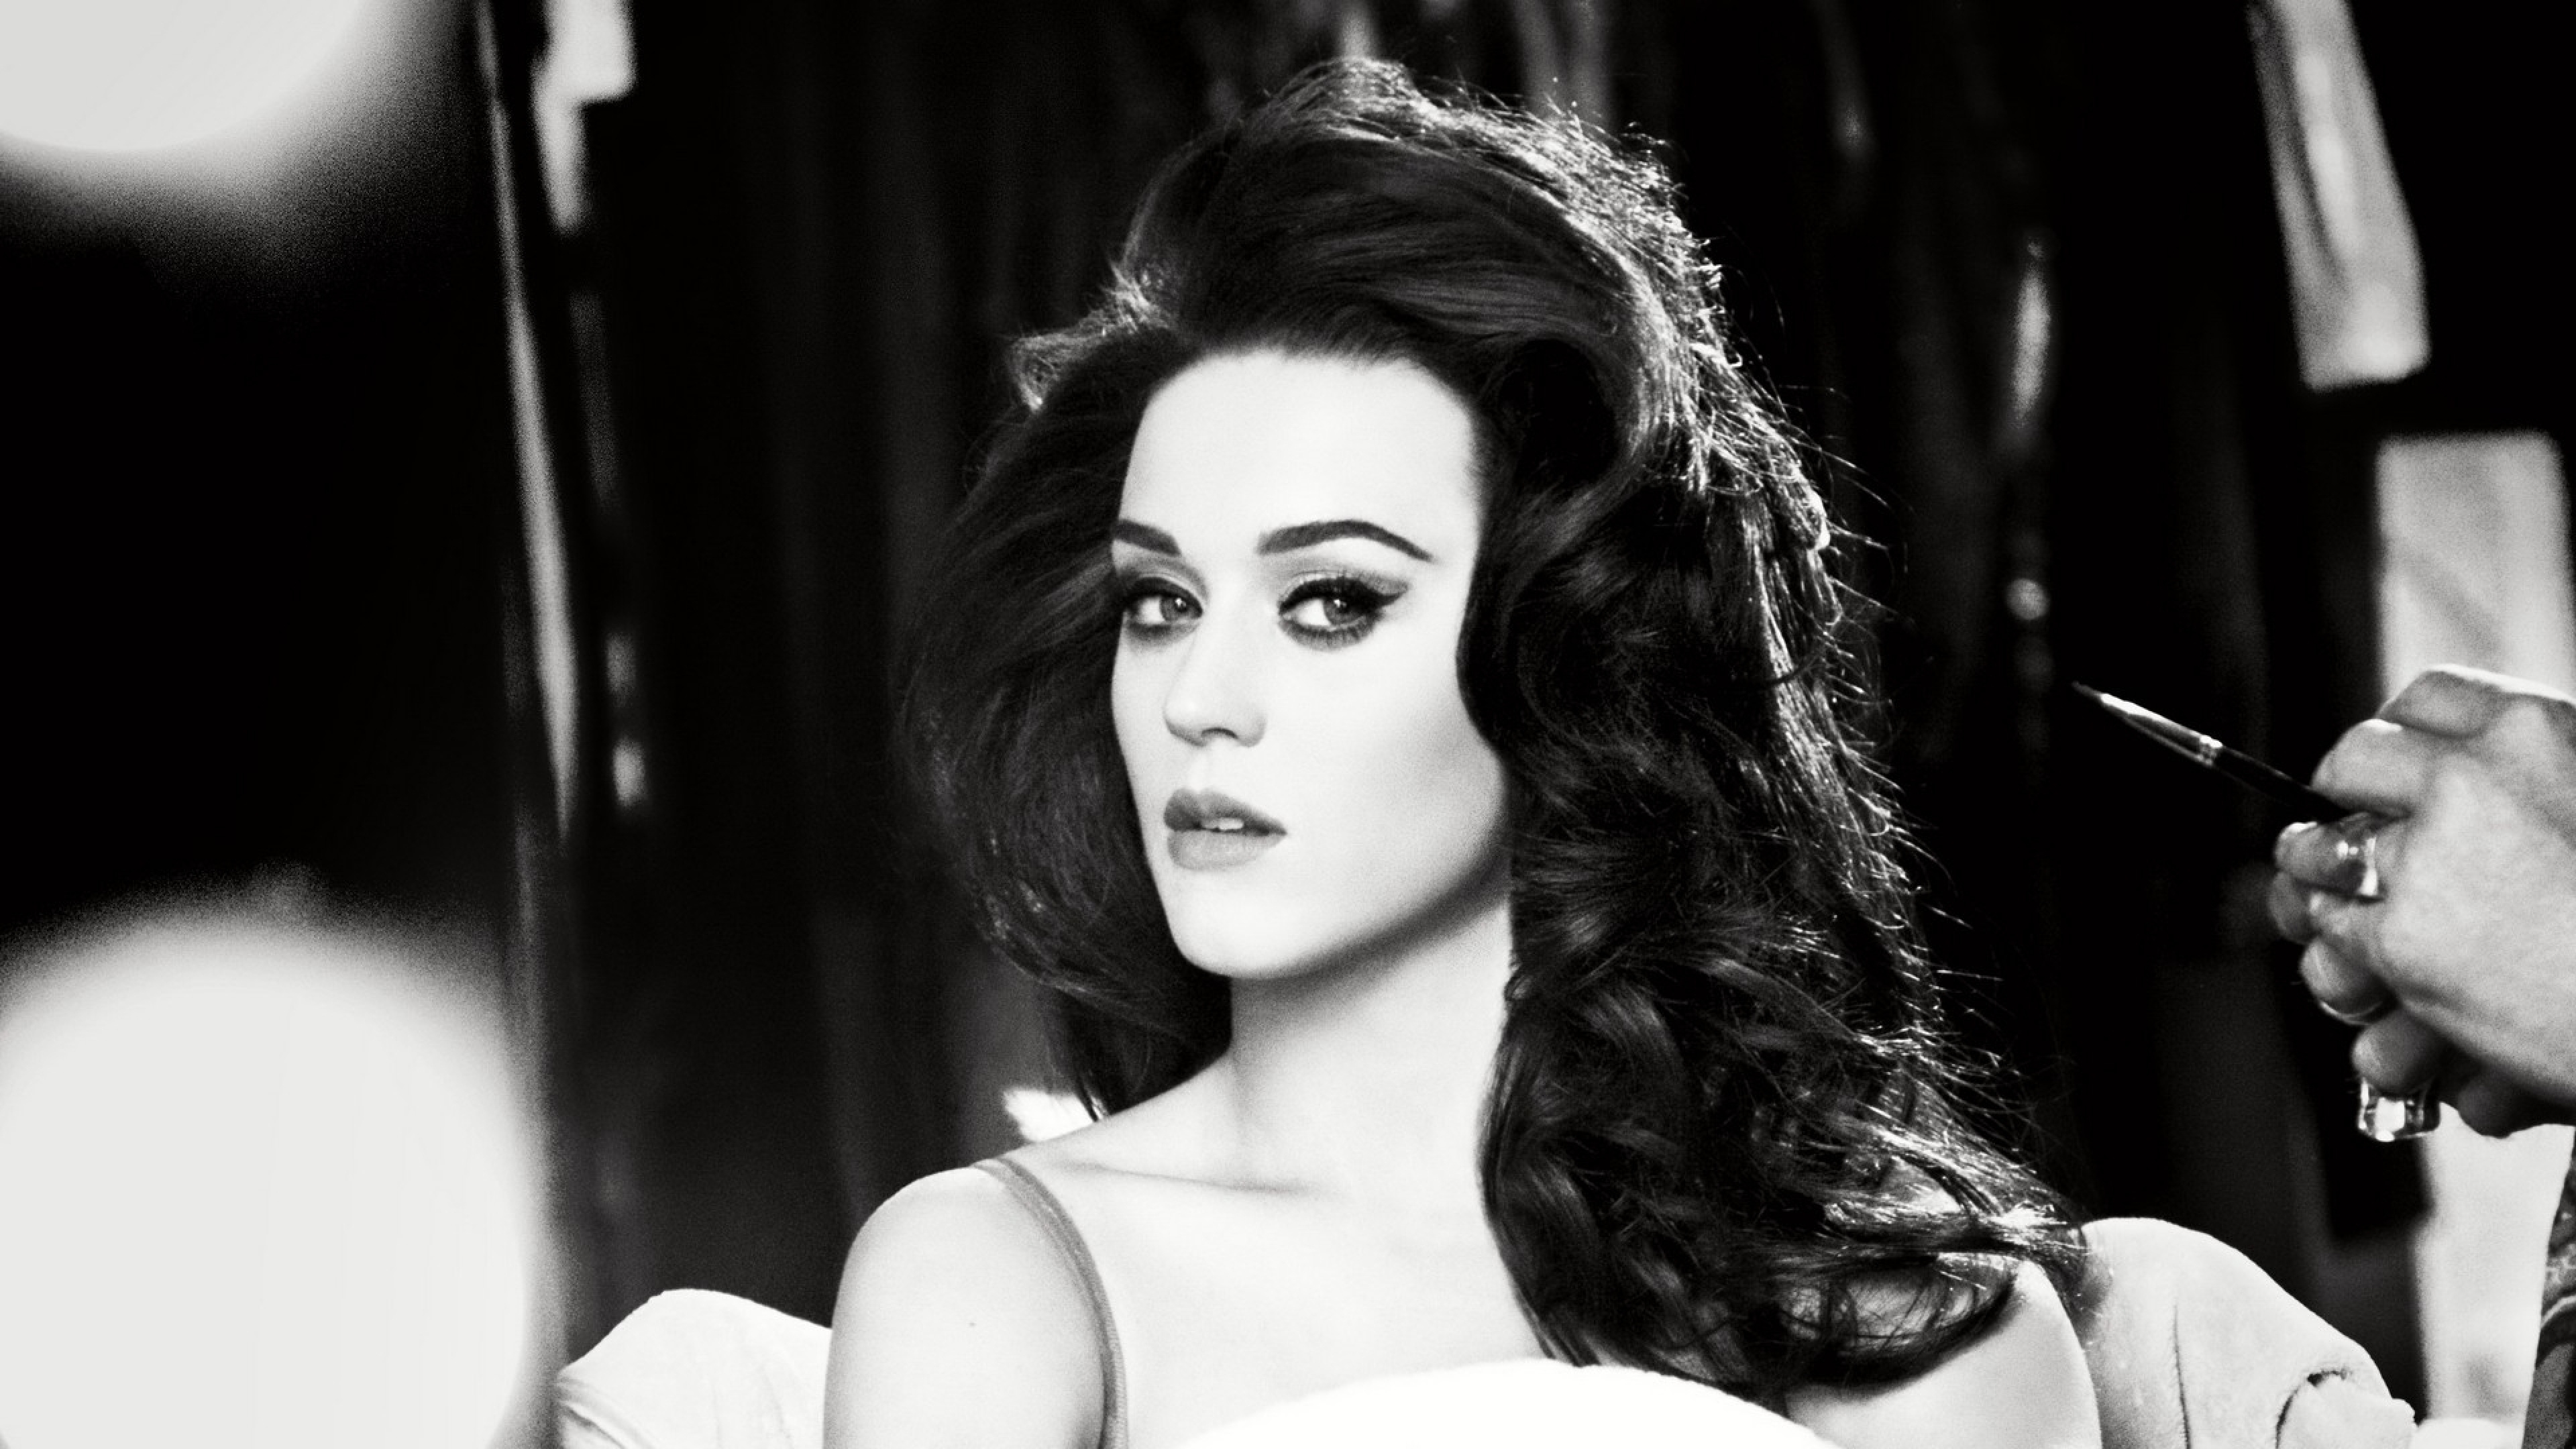 Cute HD Wallpaper Katy Perry